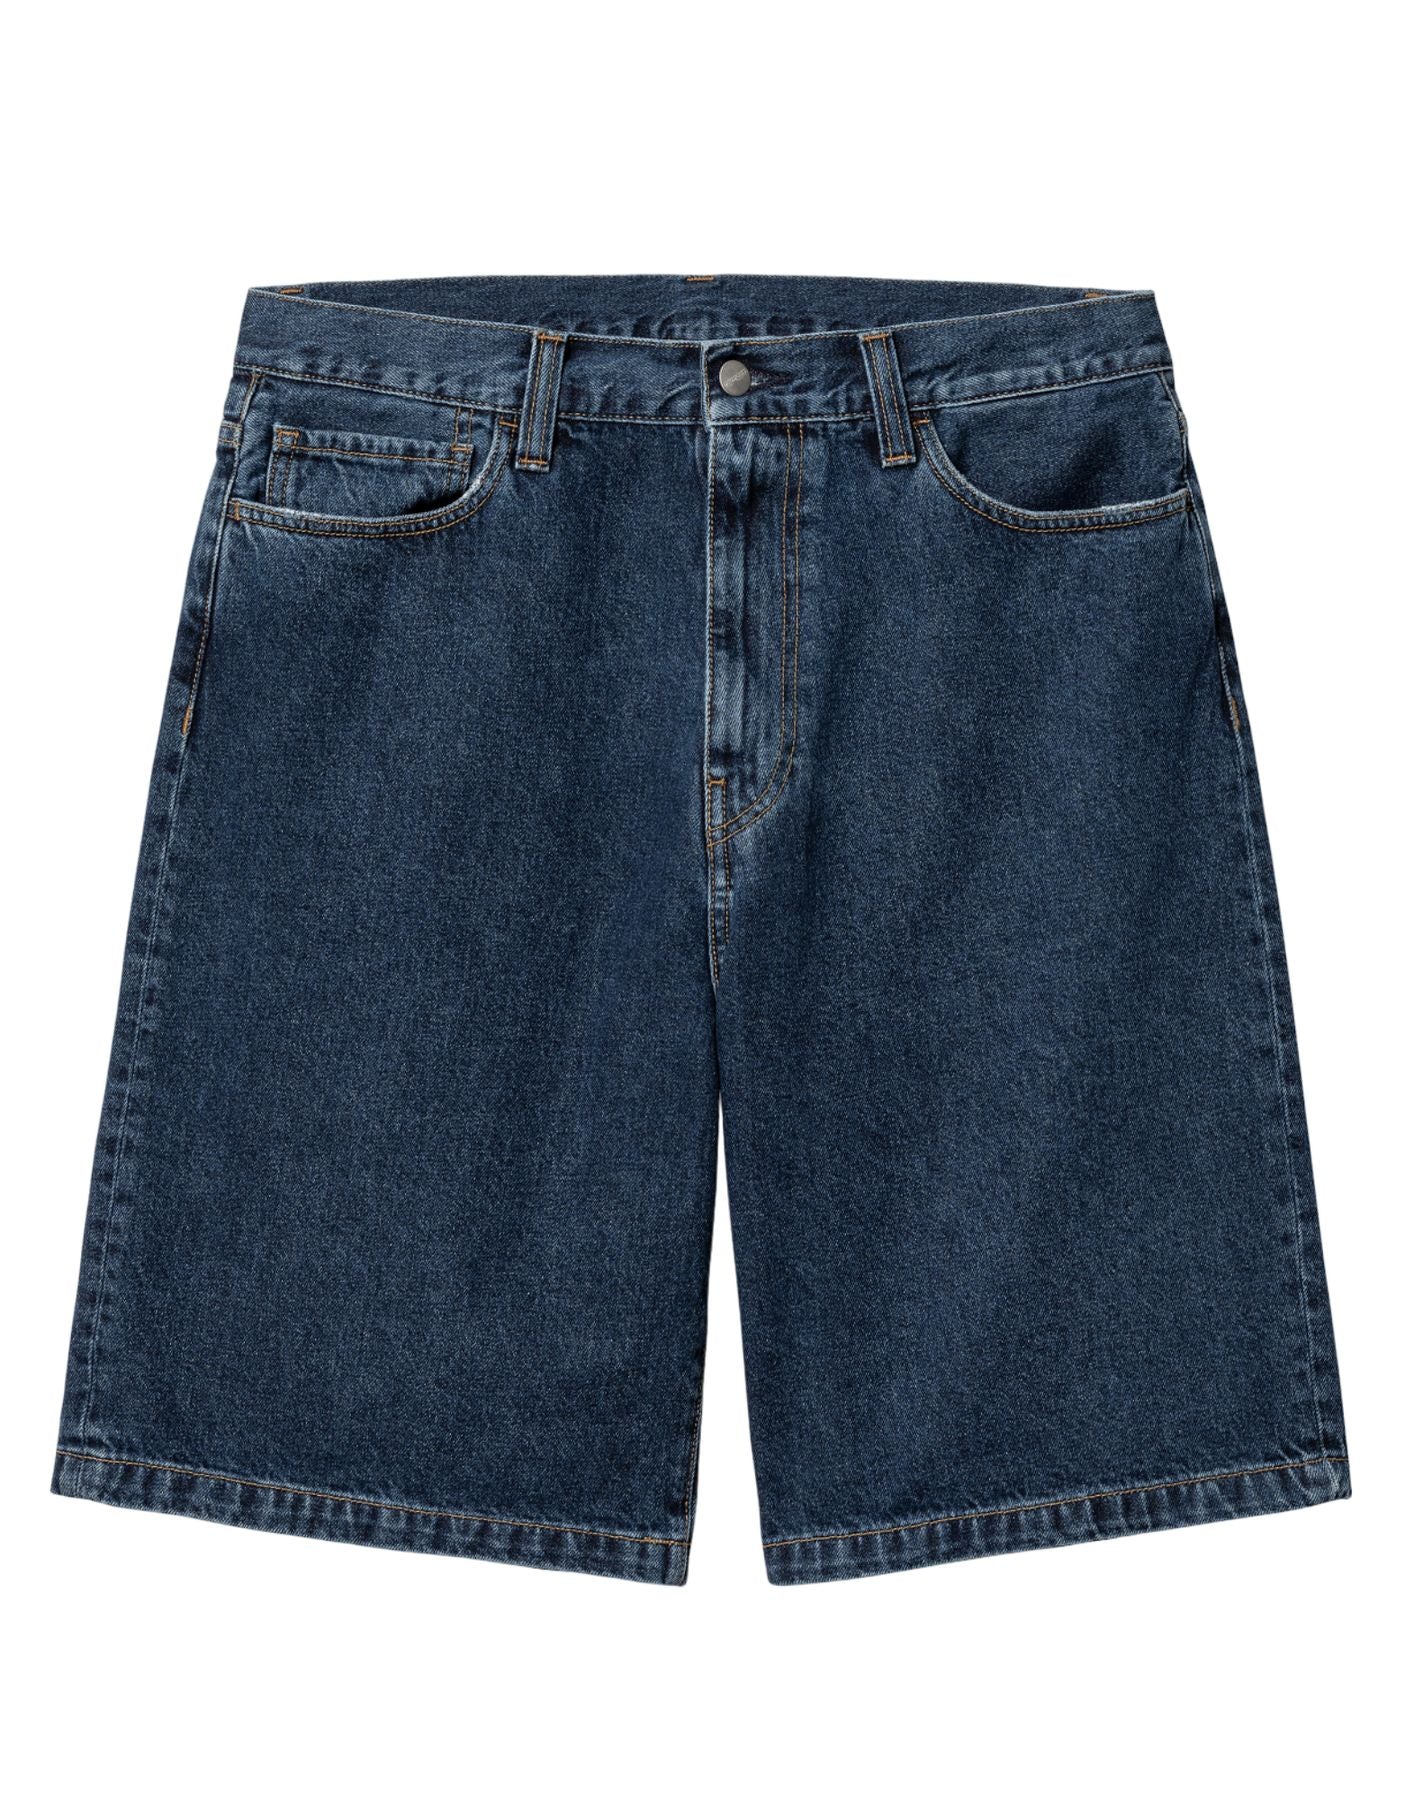 Pantalones cortos para hombre I030469 0106 CARHARTT WIP